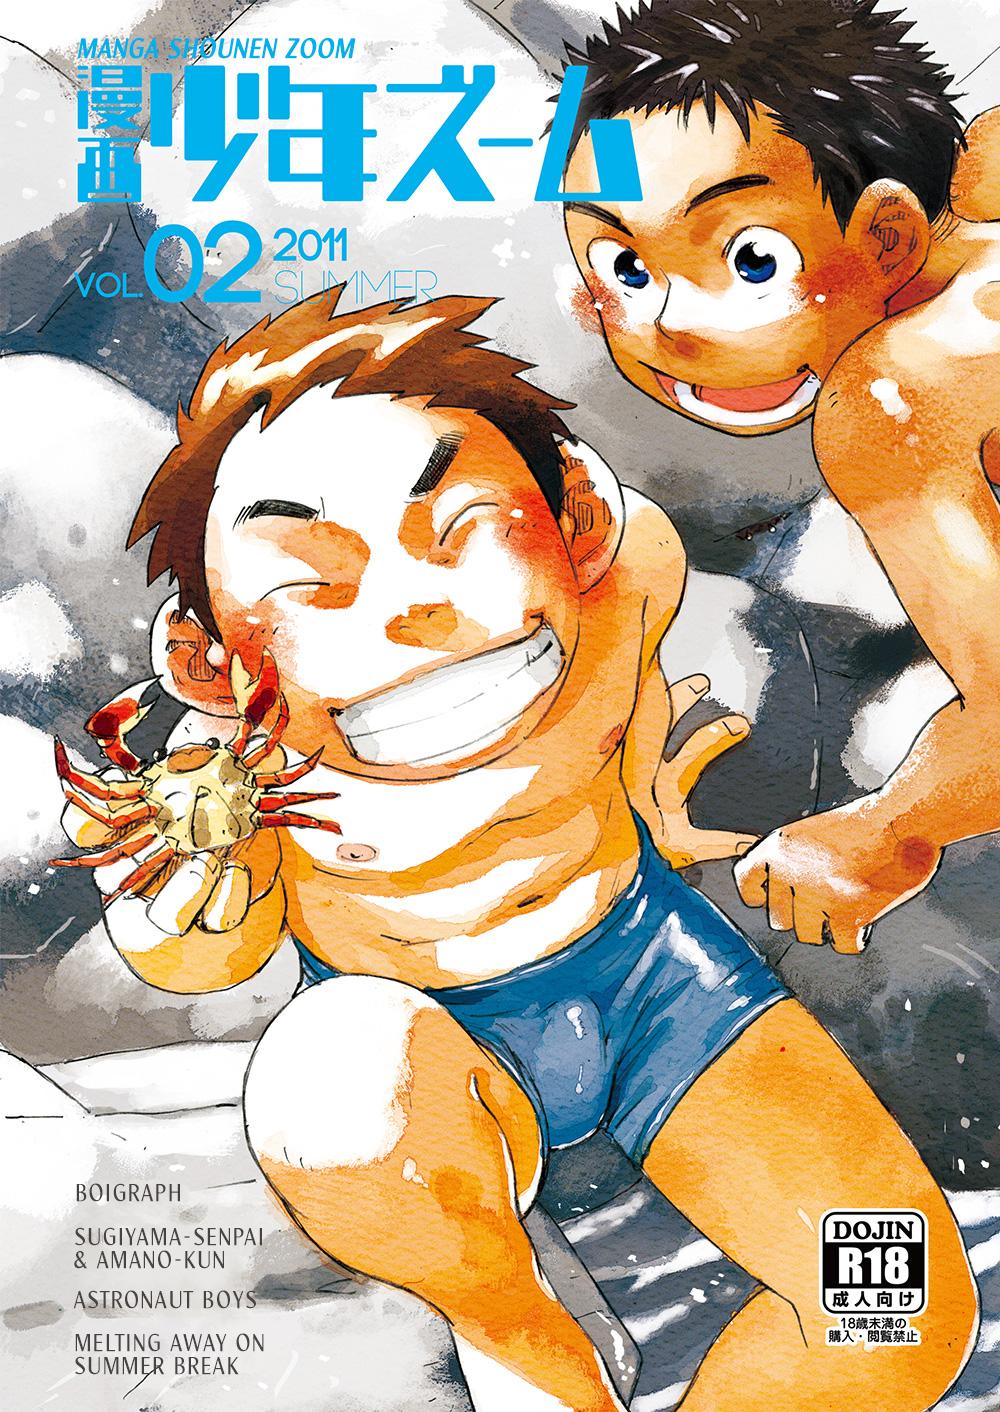 Manga Shounen Zoom Vol. 02 0